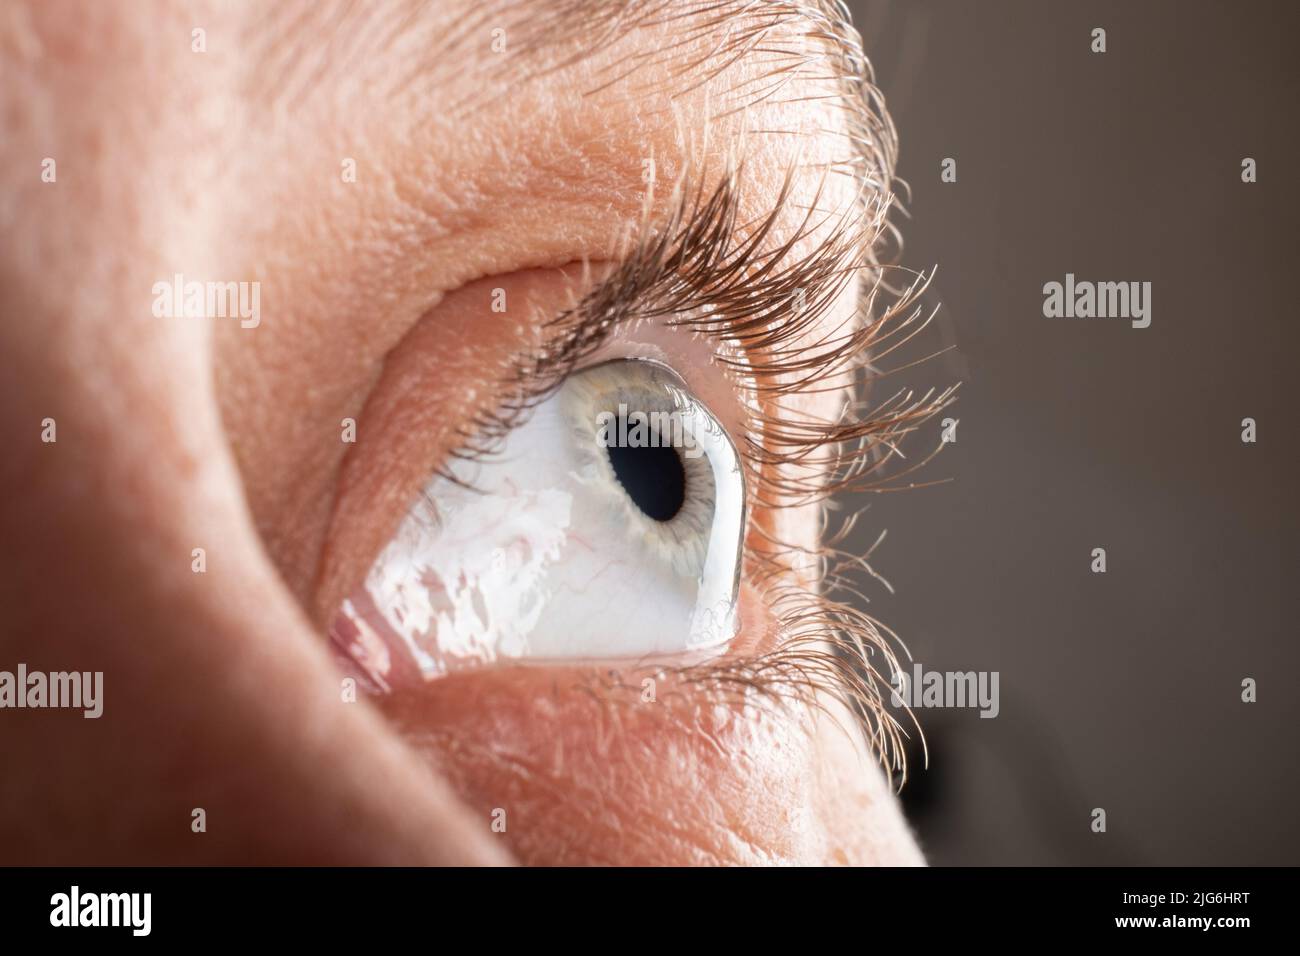 Keratokonus Augenaufnahme , Verdünnung der Hornhaut. Stockfoto